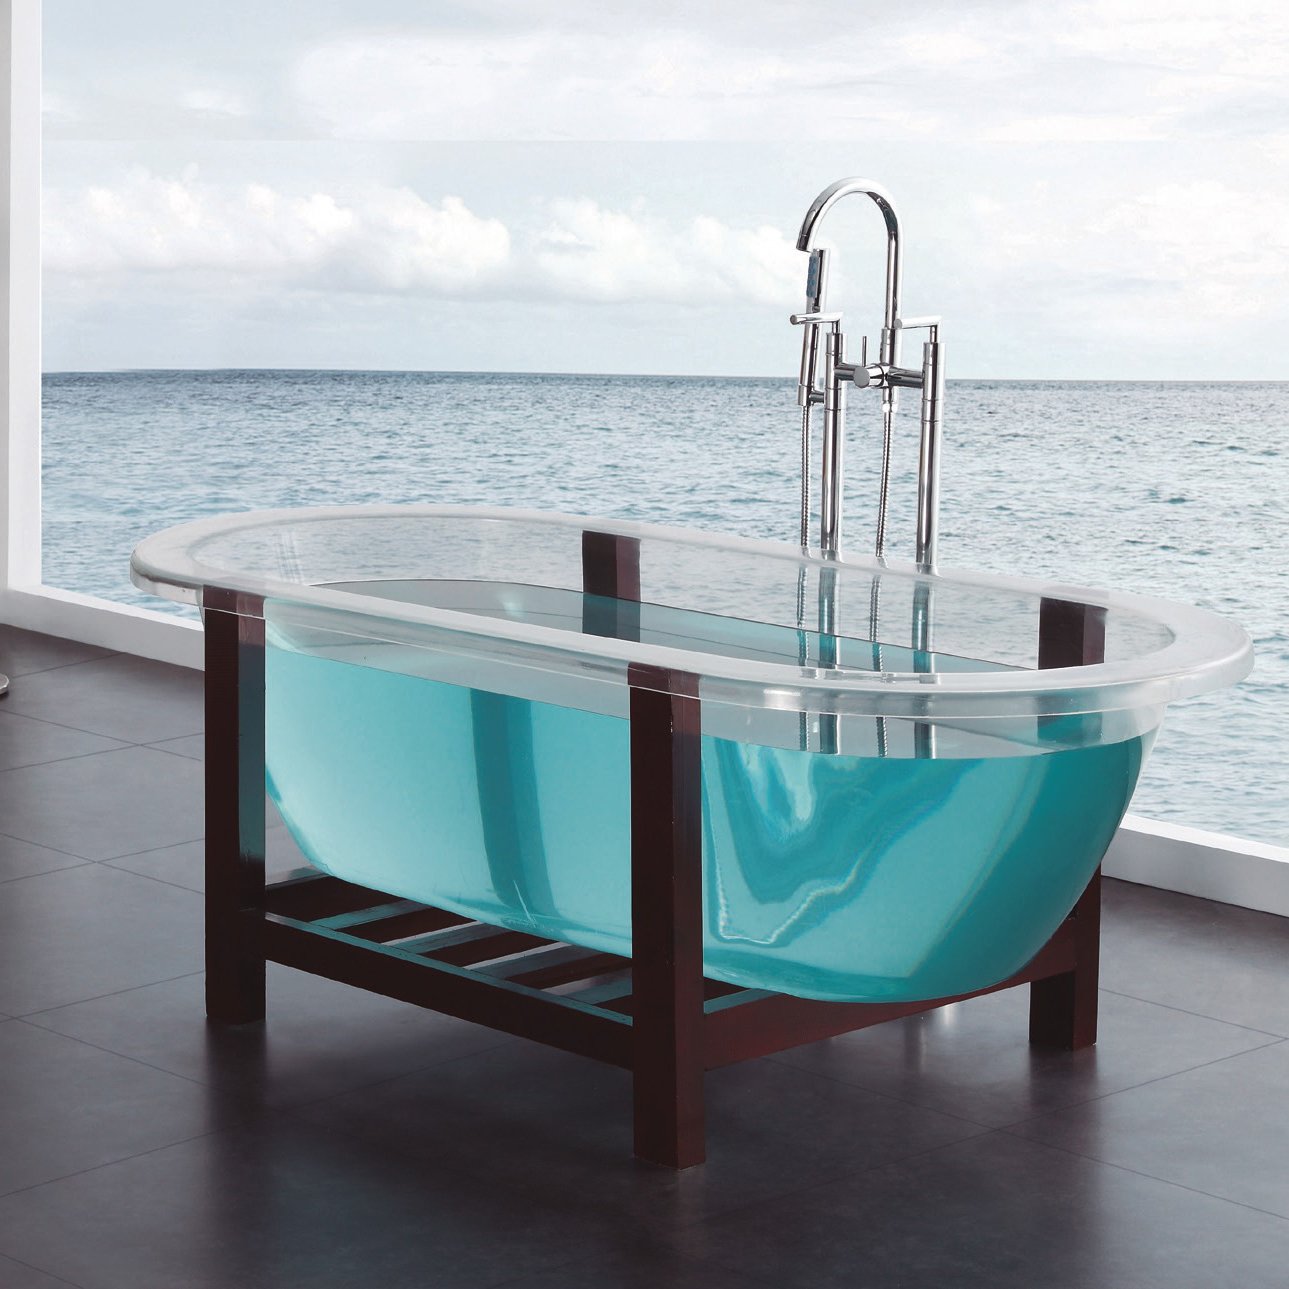 Стеклянная ванна екатеринбург. Ванна Hoesch Michael Graves 6154 акрил. Ванна Glass Design Paradiso Bathtub. Стеклянная ванна прозрачная. Ванная прозрачная отдельностоящая.